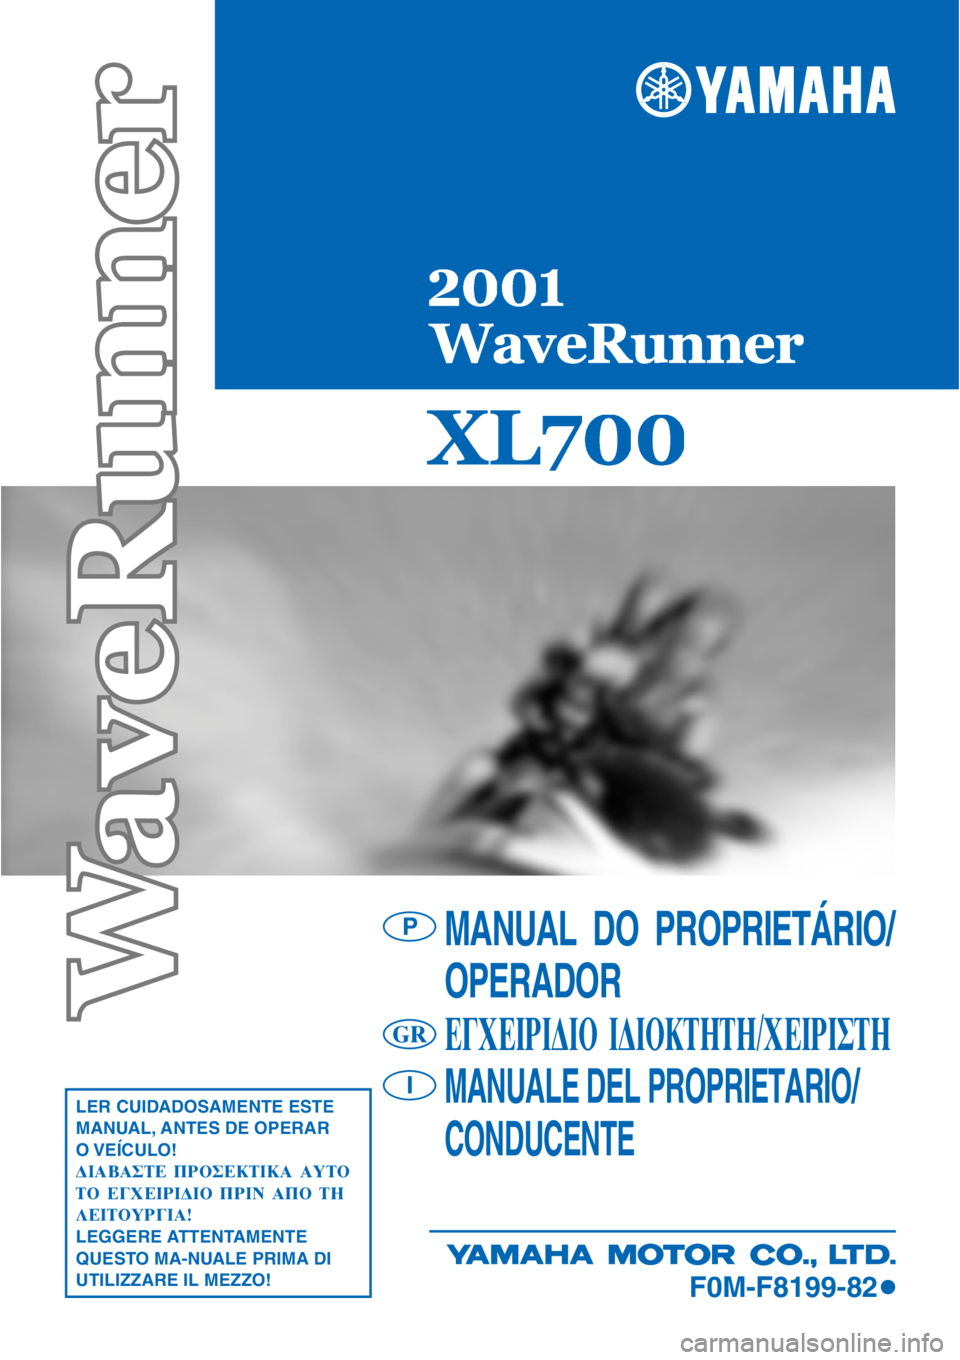 YAMAHA XL 700 2001  Manual de utilização (in Portuguese) 

MANUAL  DO  PROPRIETÁRIO/
OPERADOR
∂°Ã∂πƒπ¢π√ π¢π√∫∆∏∆∏/Ã∂πƒπ™∆∏
MANUALE DEL PROPRIETARIO/
CONDUCENTELER CUIDADOSAMENTE ESTE
MANUAL, ANTES DE OPERAR